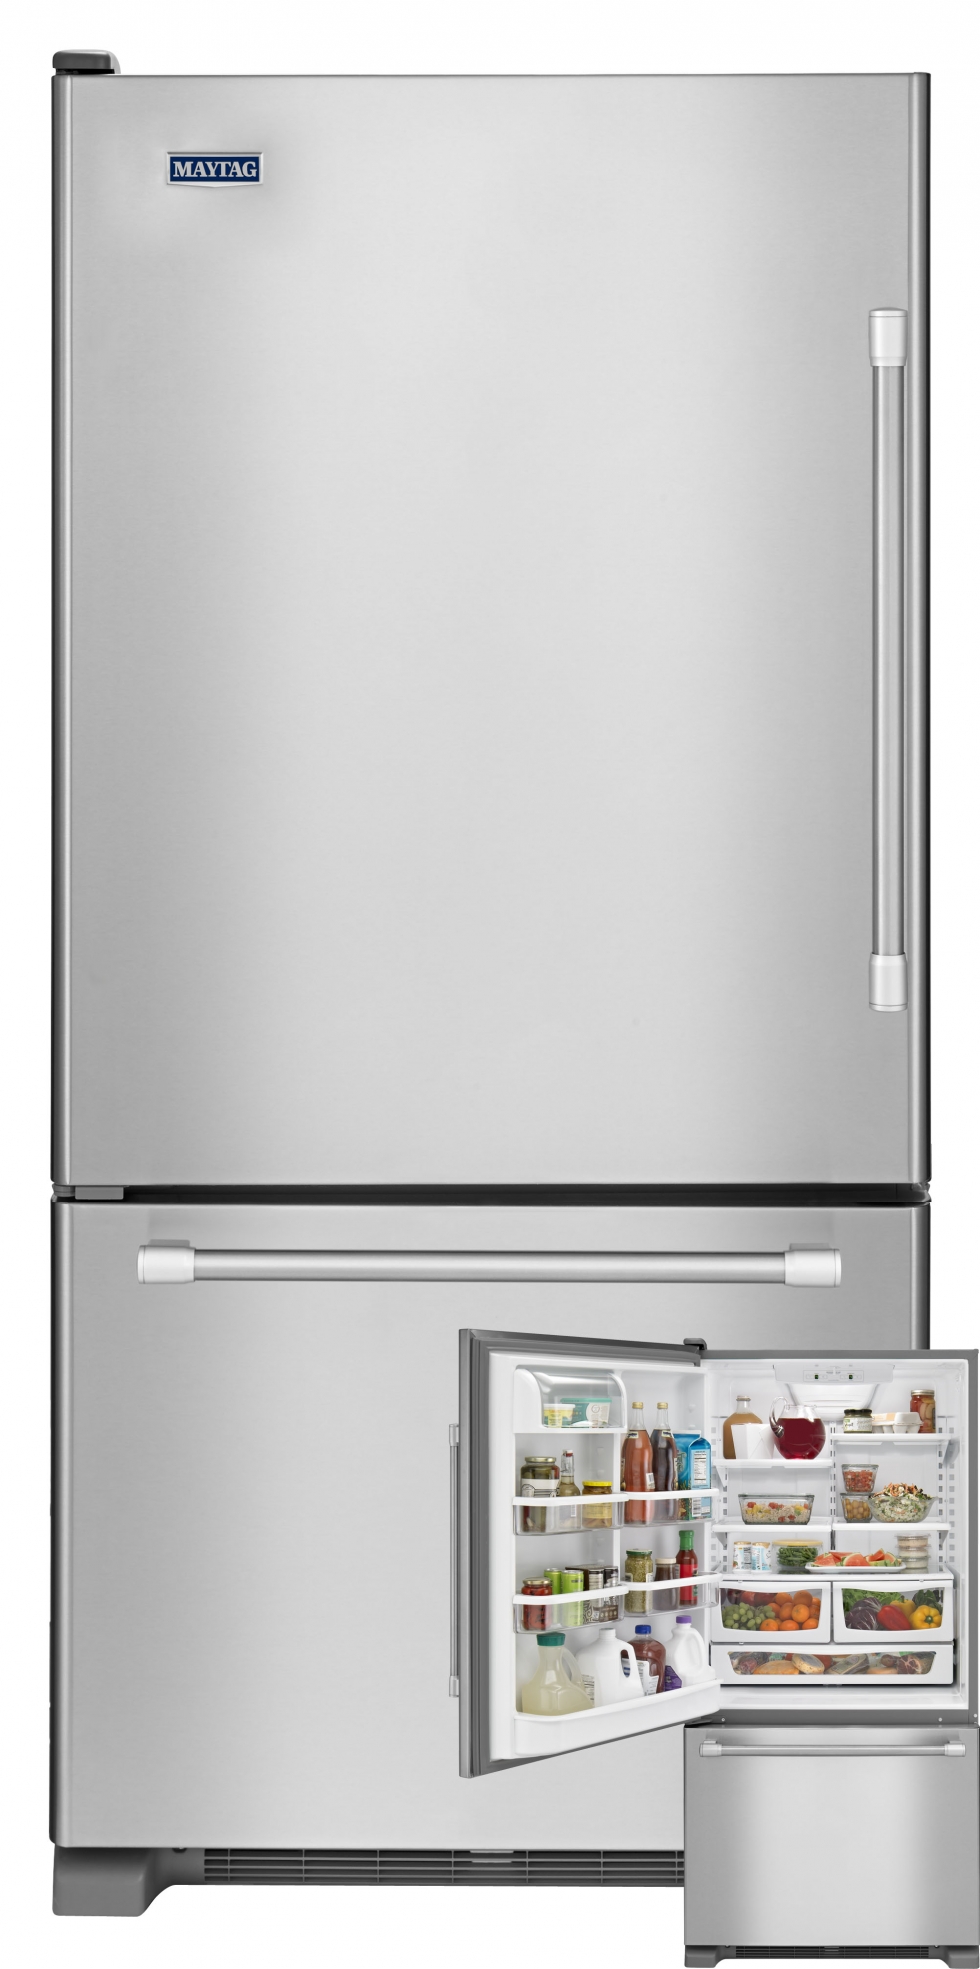 Maytag Bottom Freezer Refrigerator Stainless Steel